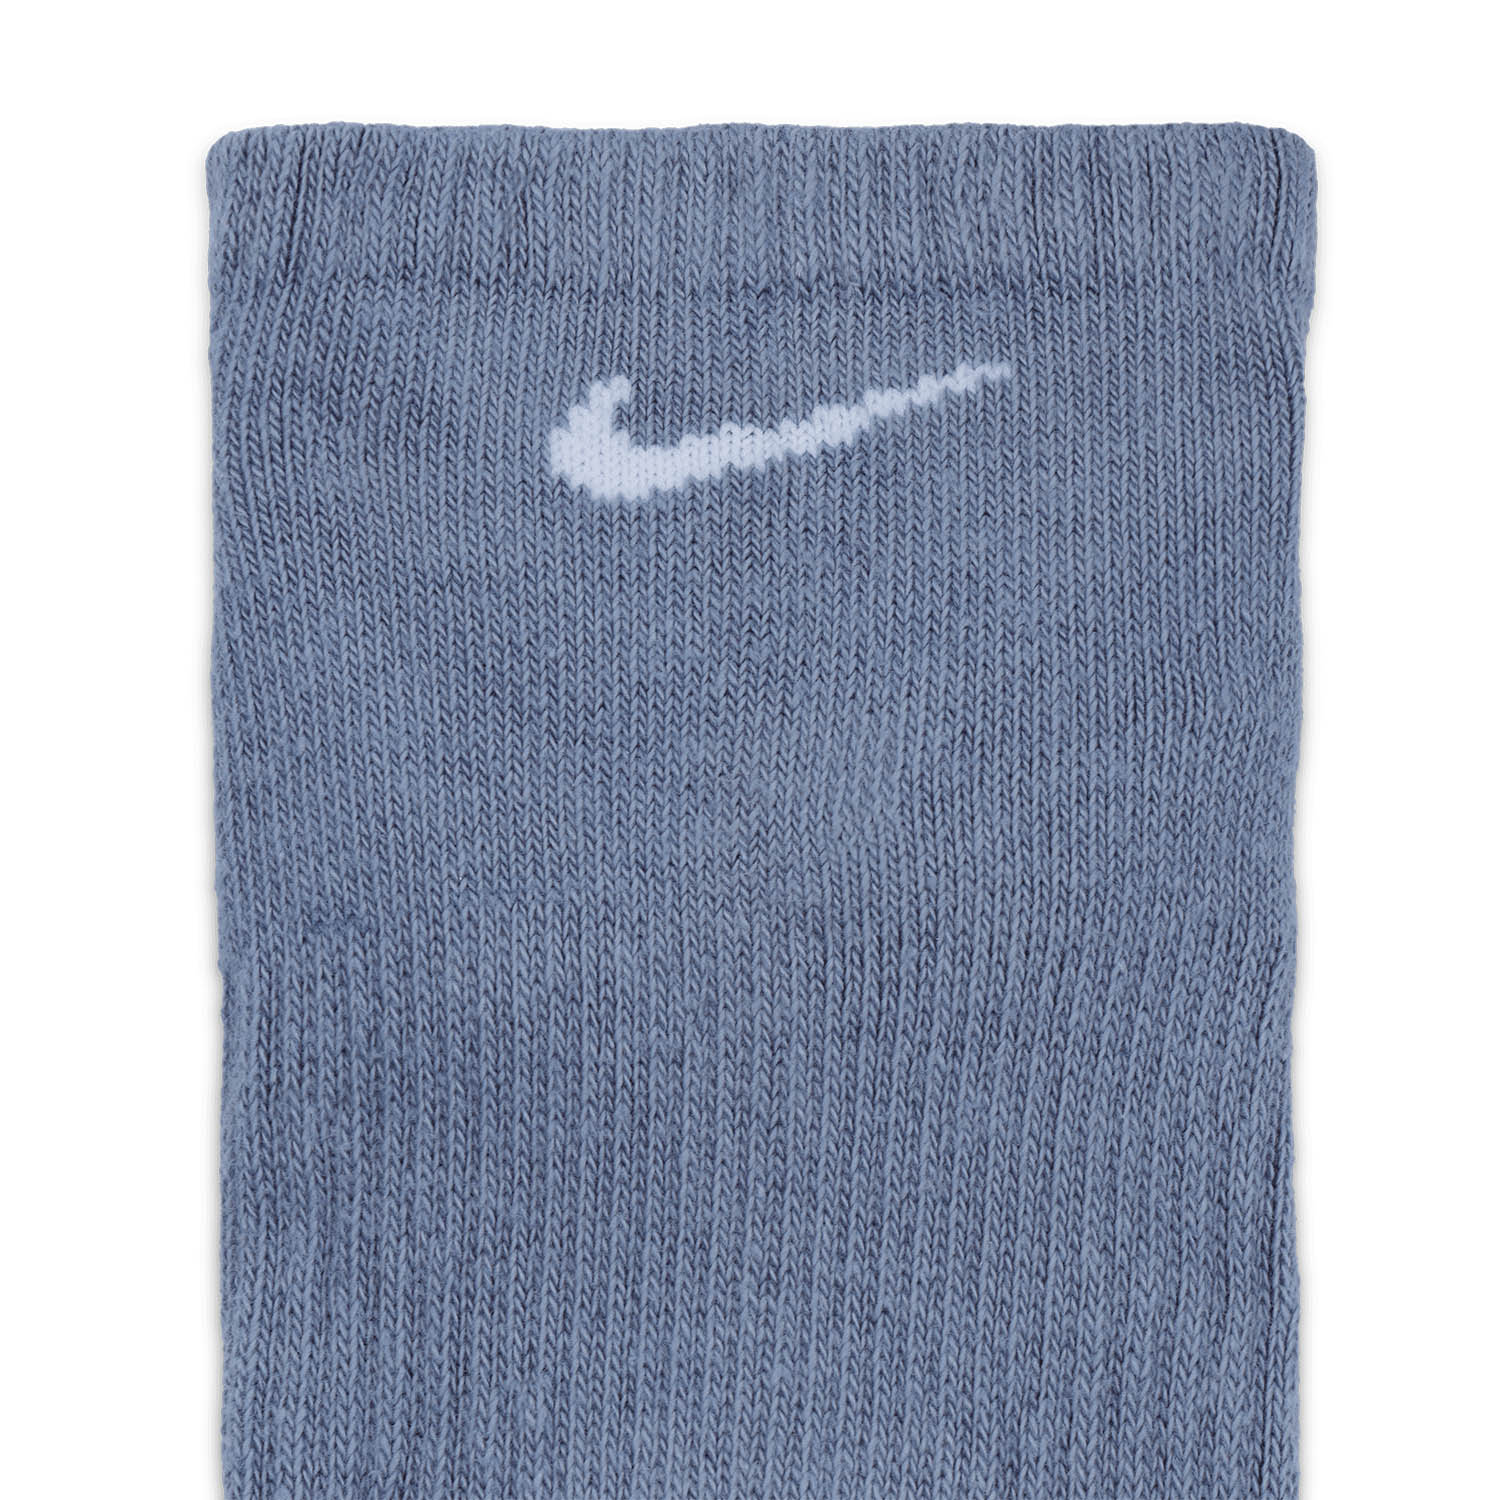 Nike Everyday Cushioned Training No-Show Socks 3 Pack, Socks & Underwear